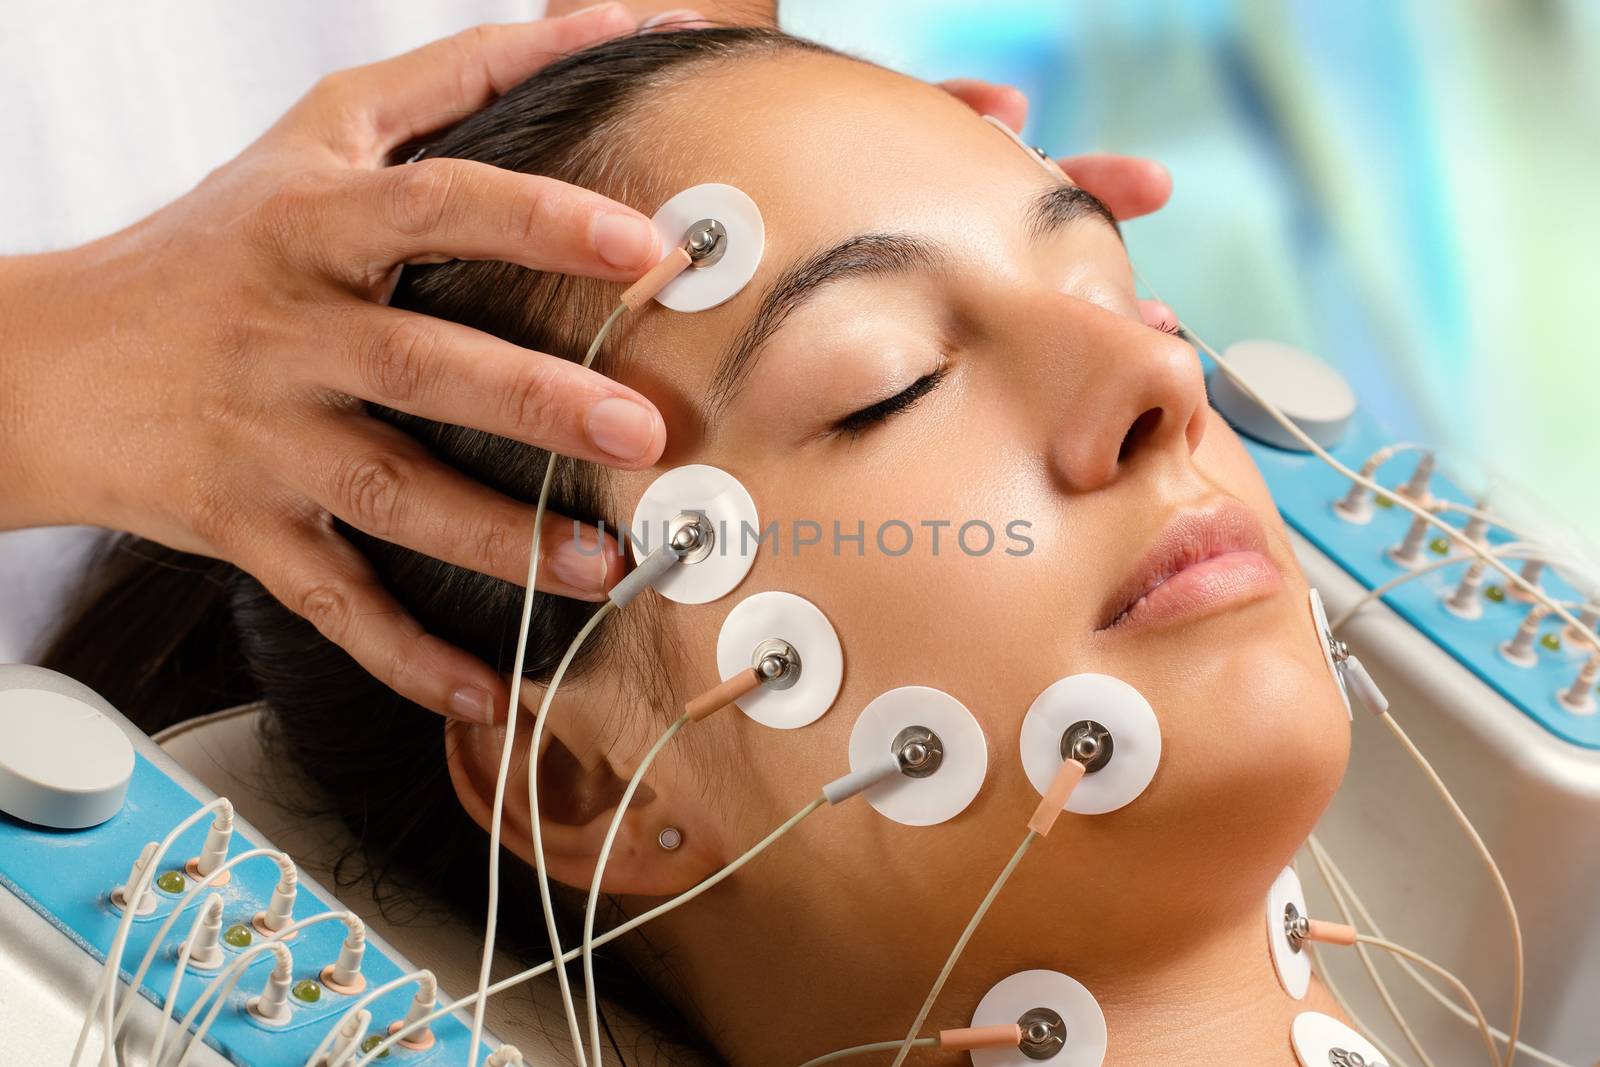 Woman having electrical facial skin tightening treatment. by karelnoppe